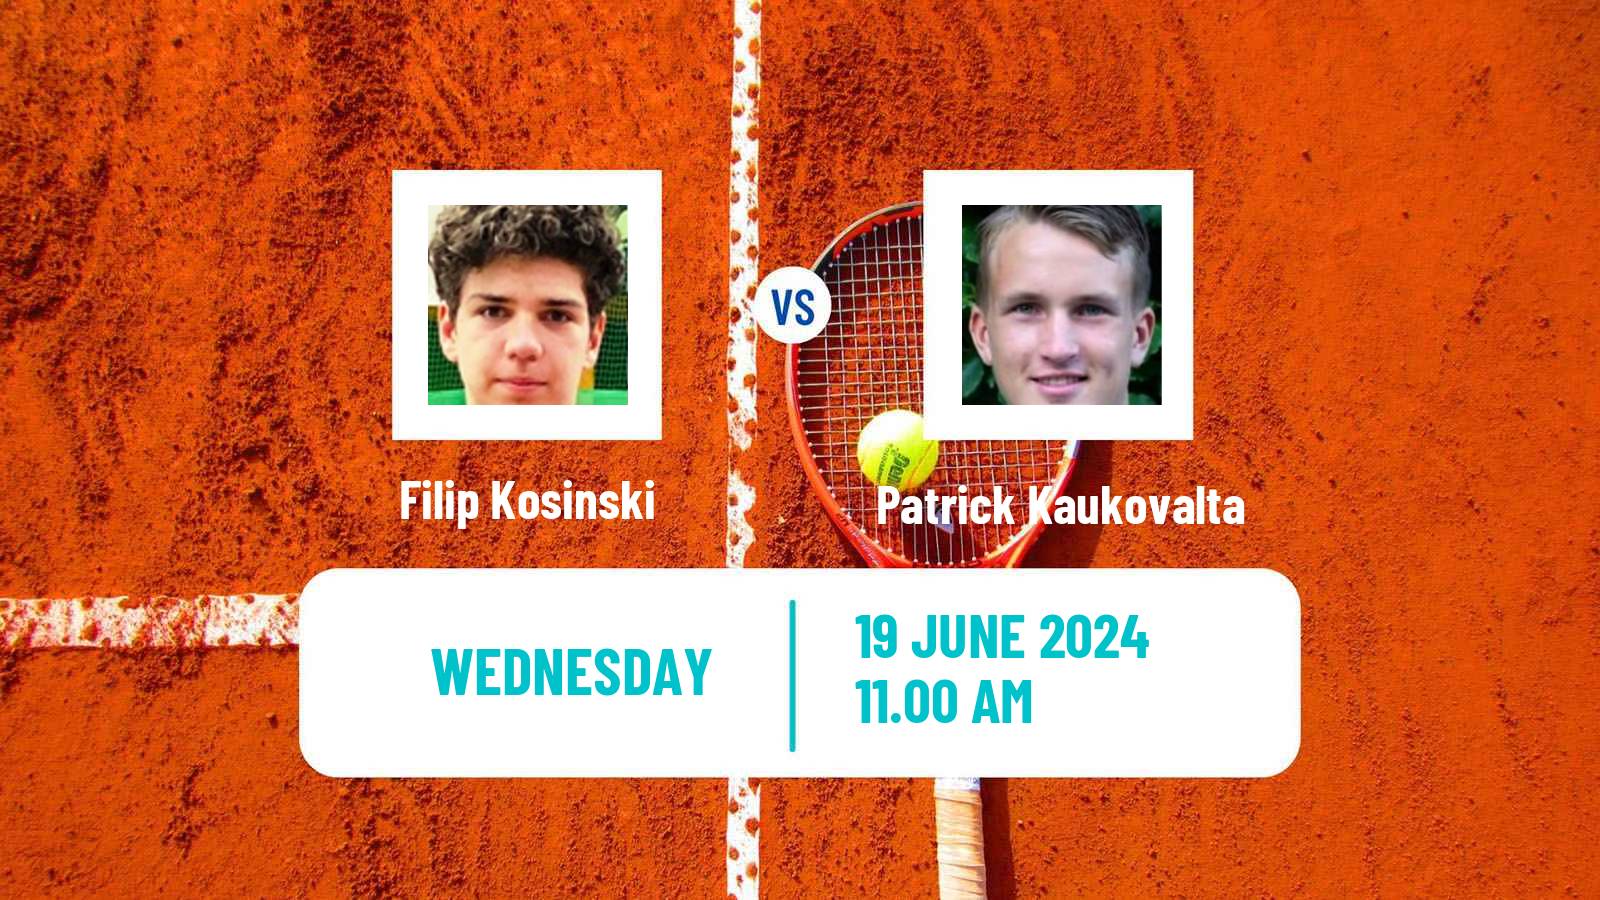 Tennis ITF M15 Koszalin 2 Men Filip Kosinski - Patrick Kaukovalta